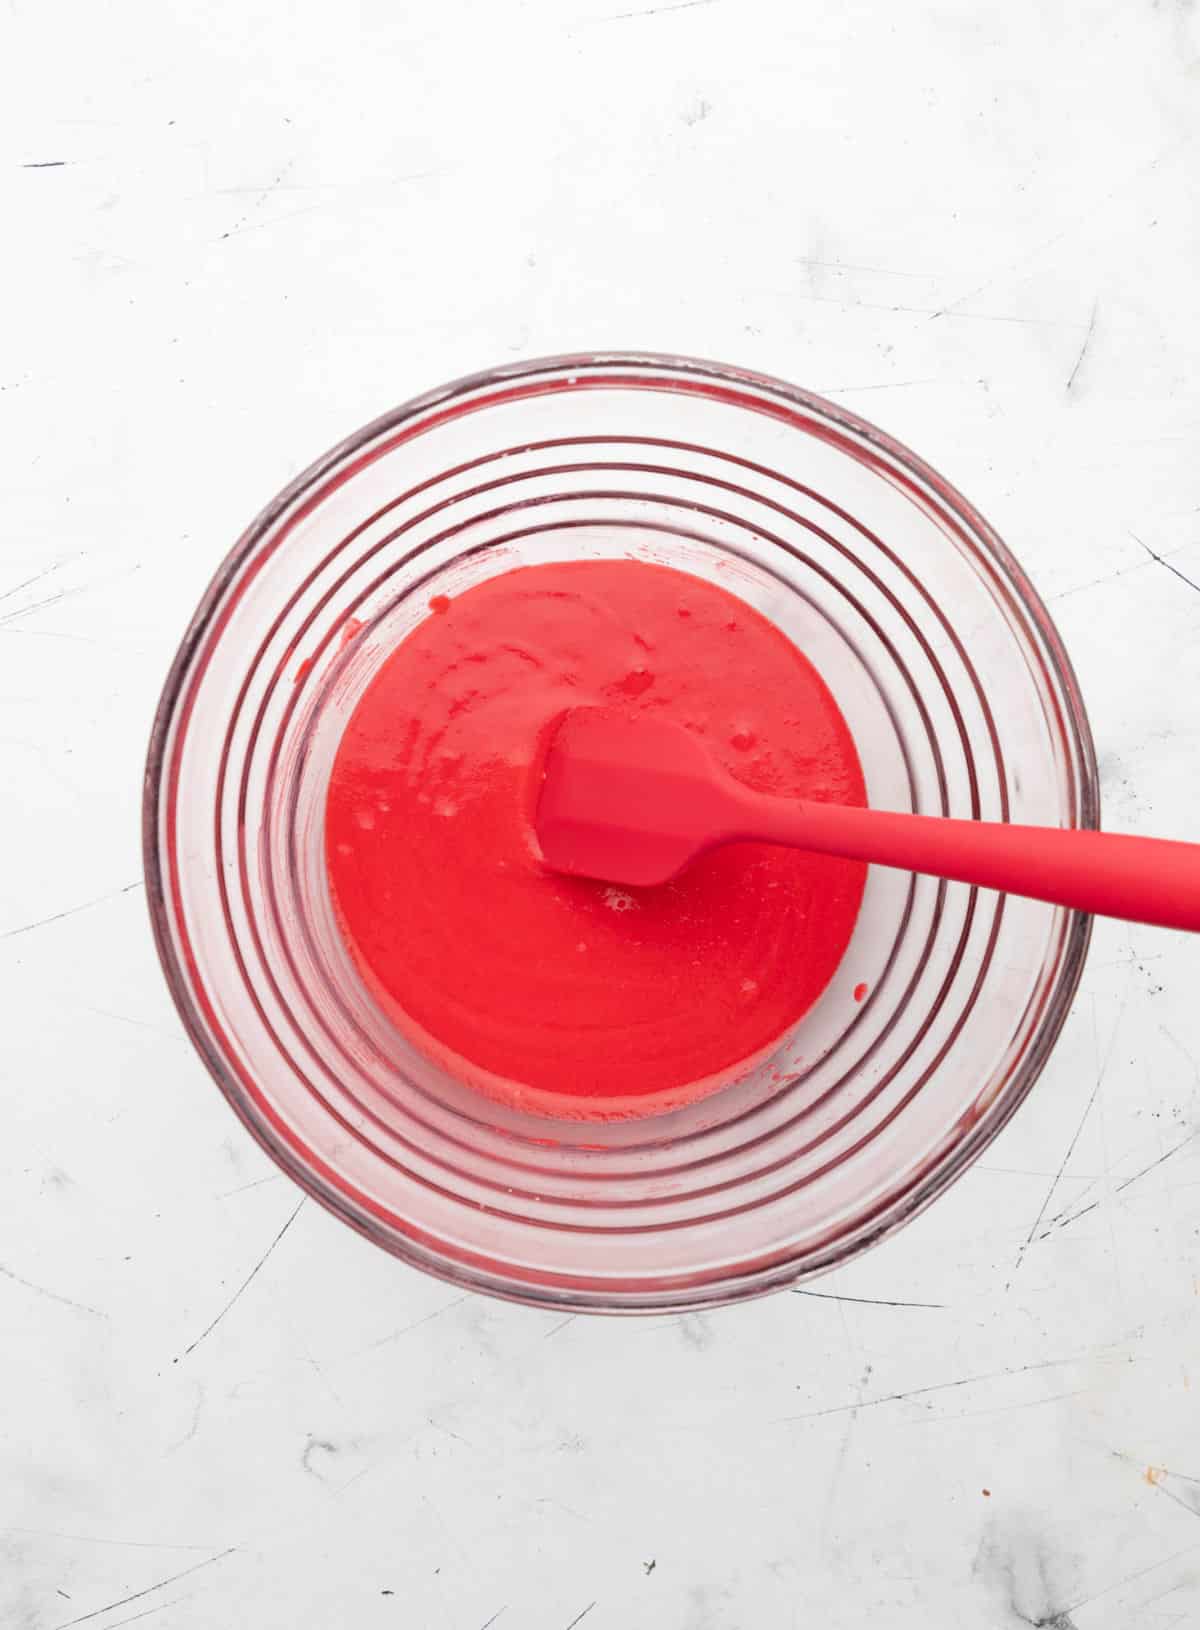 Strawberry gelatin powder and Greek yogurt mixed together in a glass mixing bowl. 